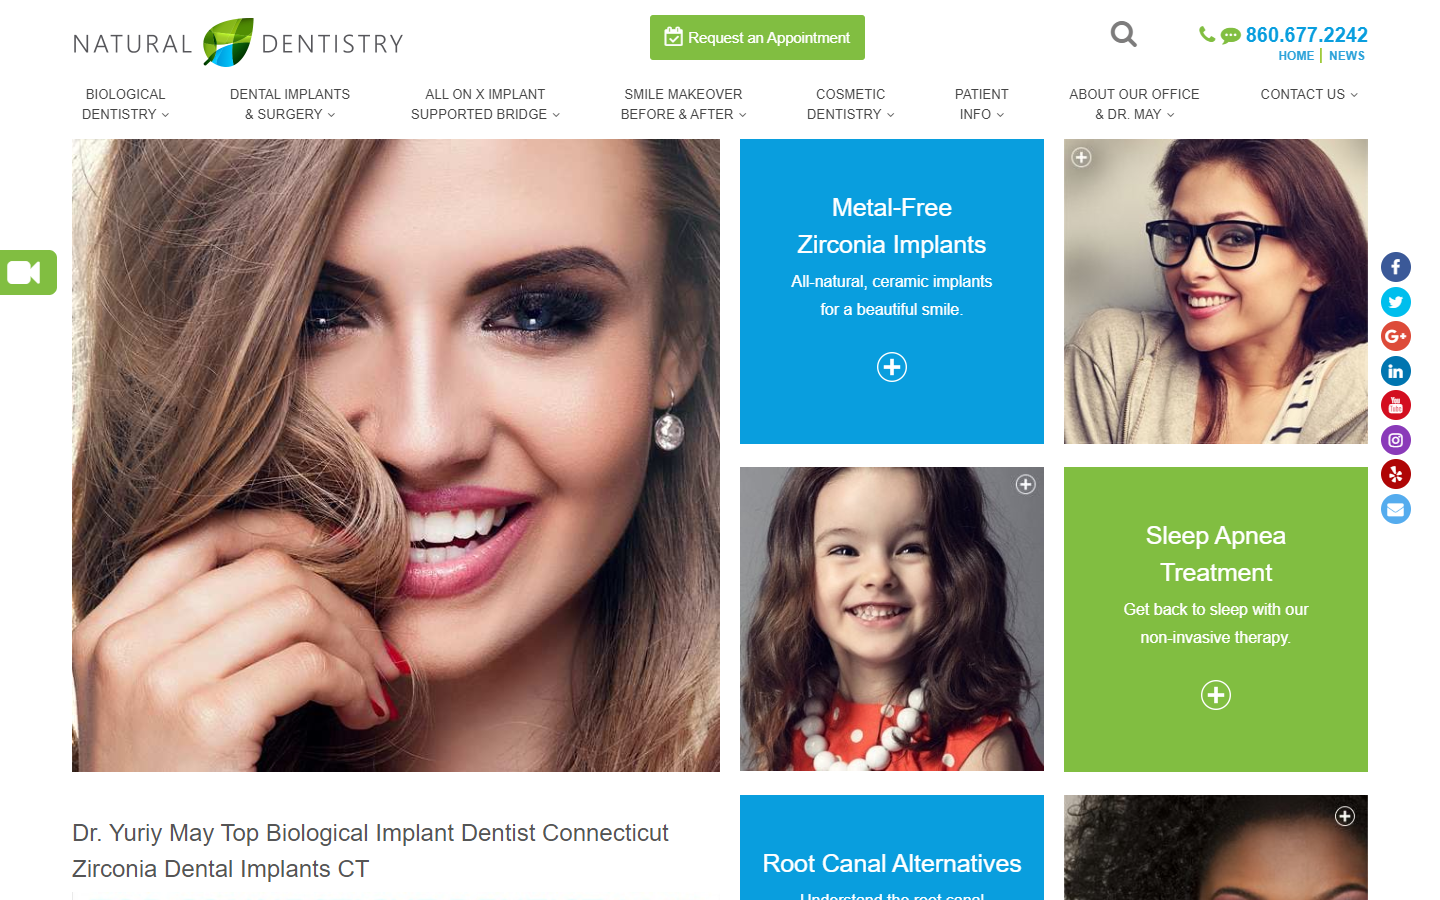 Website of Natural Dentistry